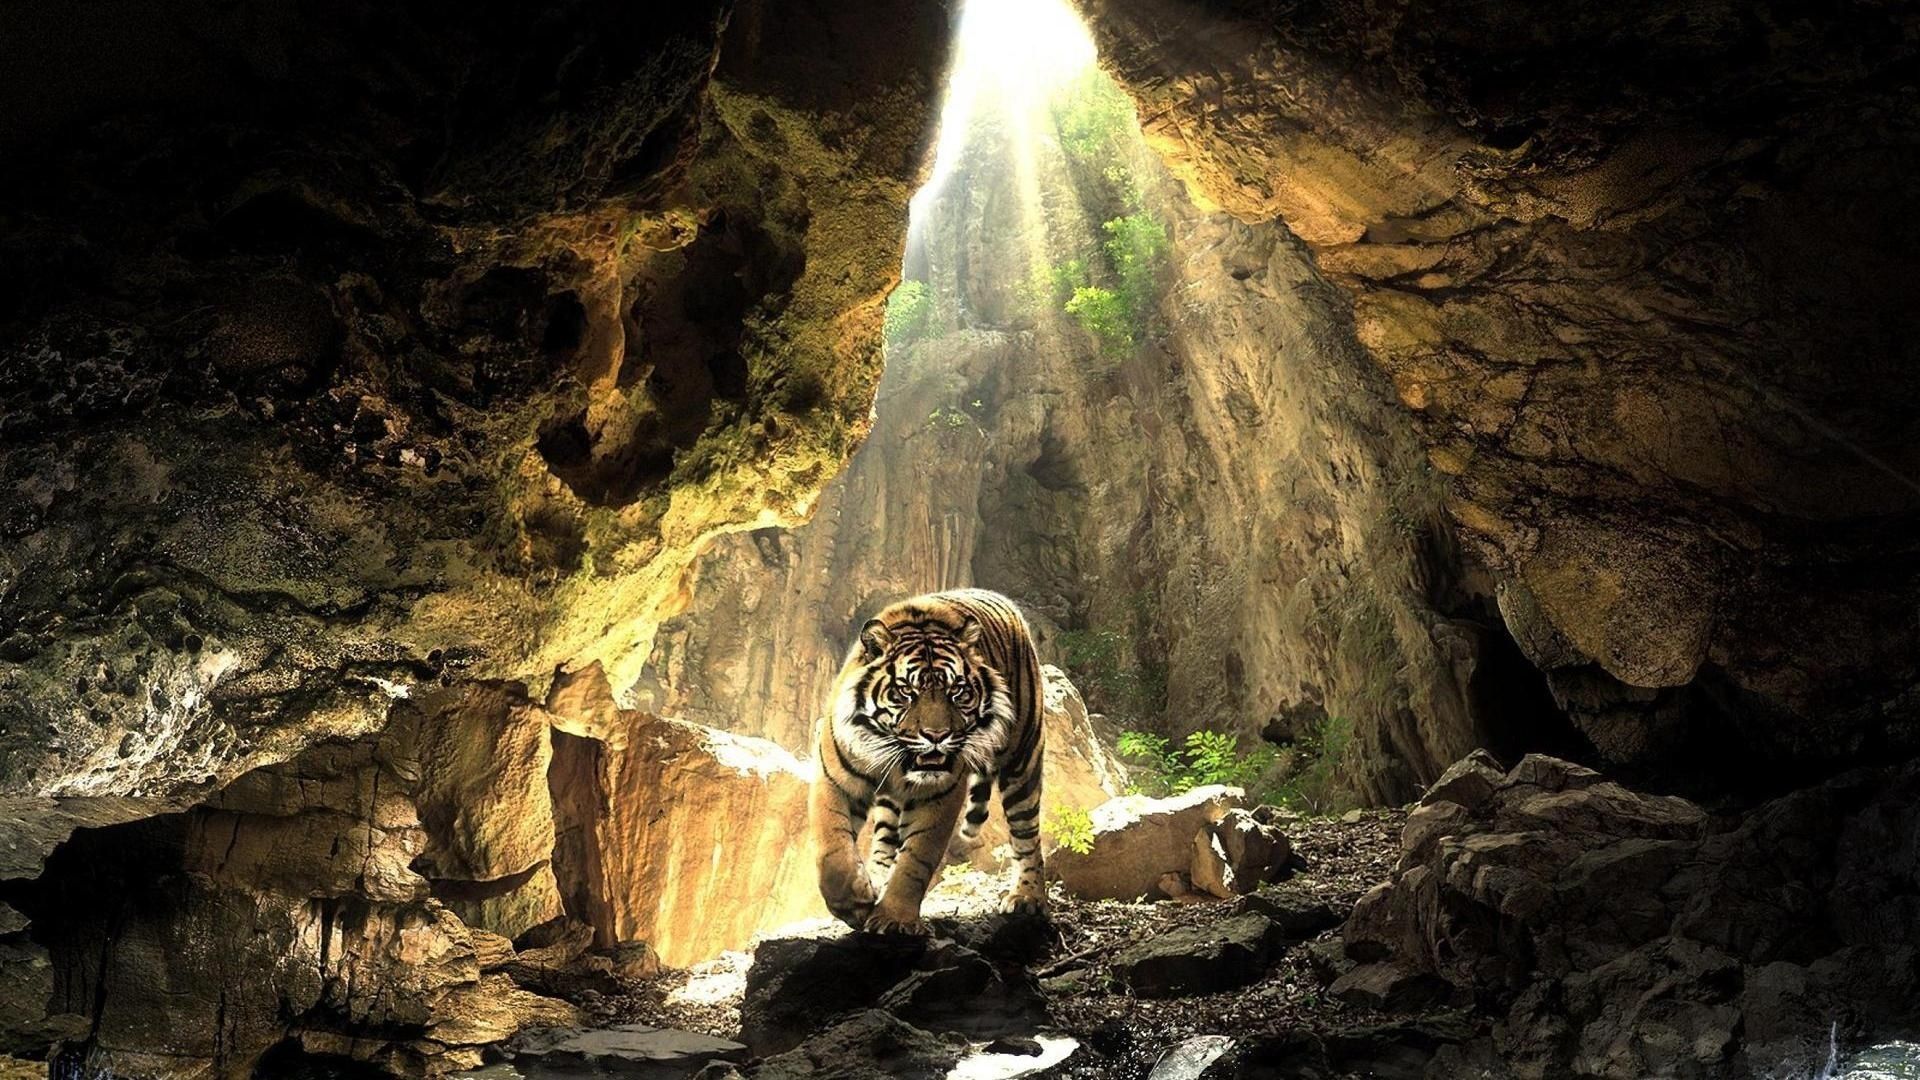 120 4k Tiger Images, Stock Photos & Vectors | Shutterstock